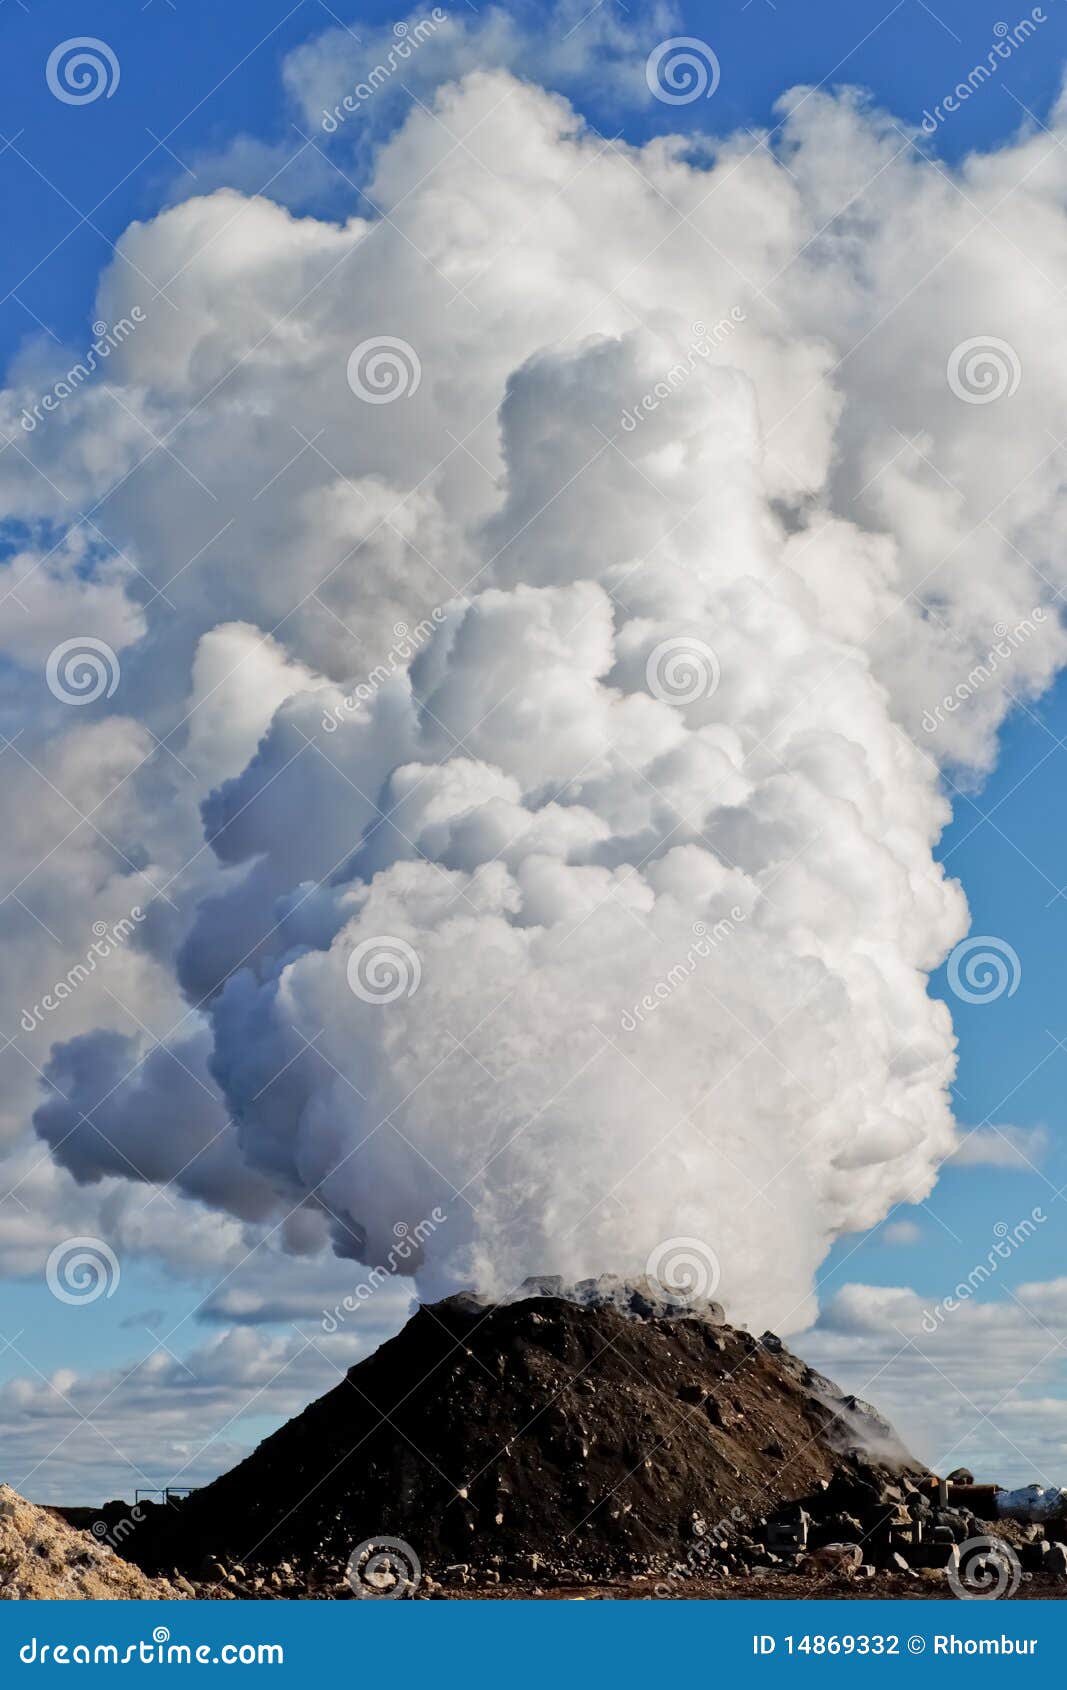 что такое облако steam фото 110